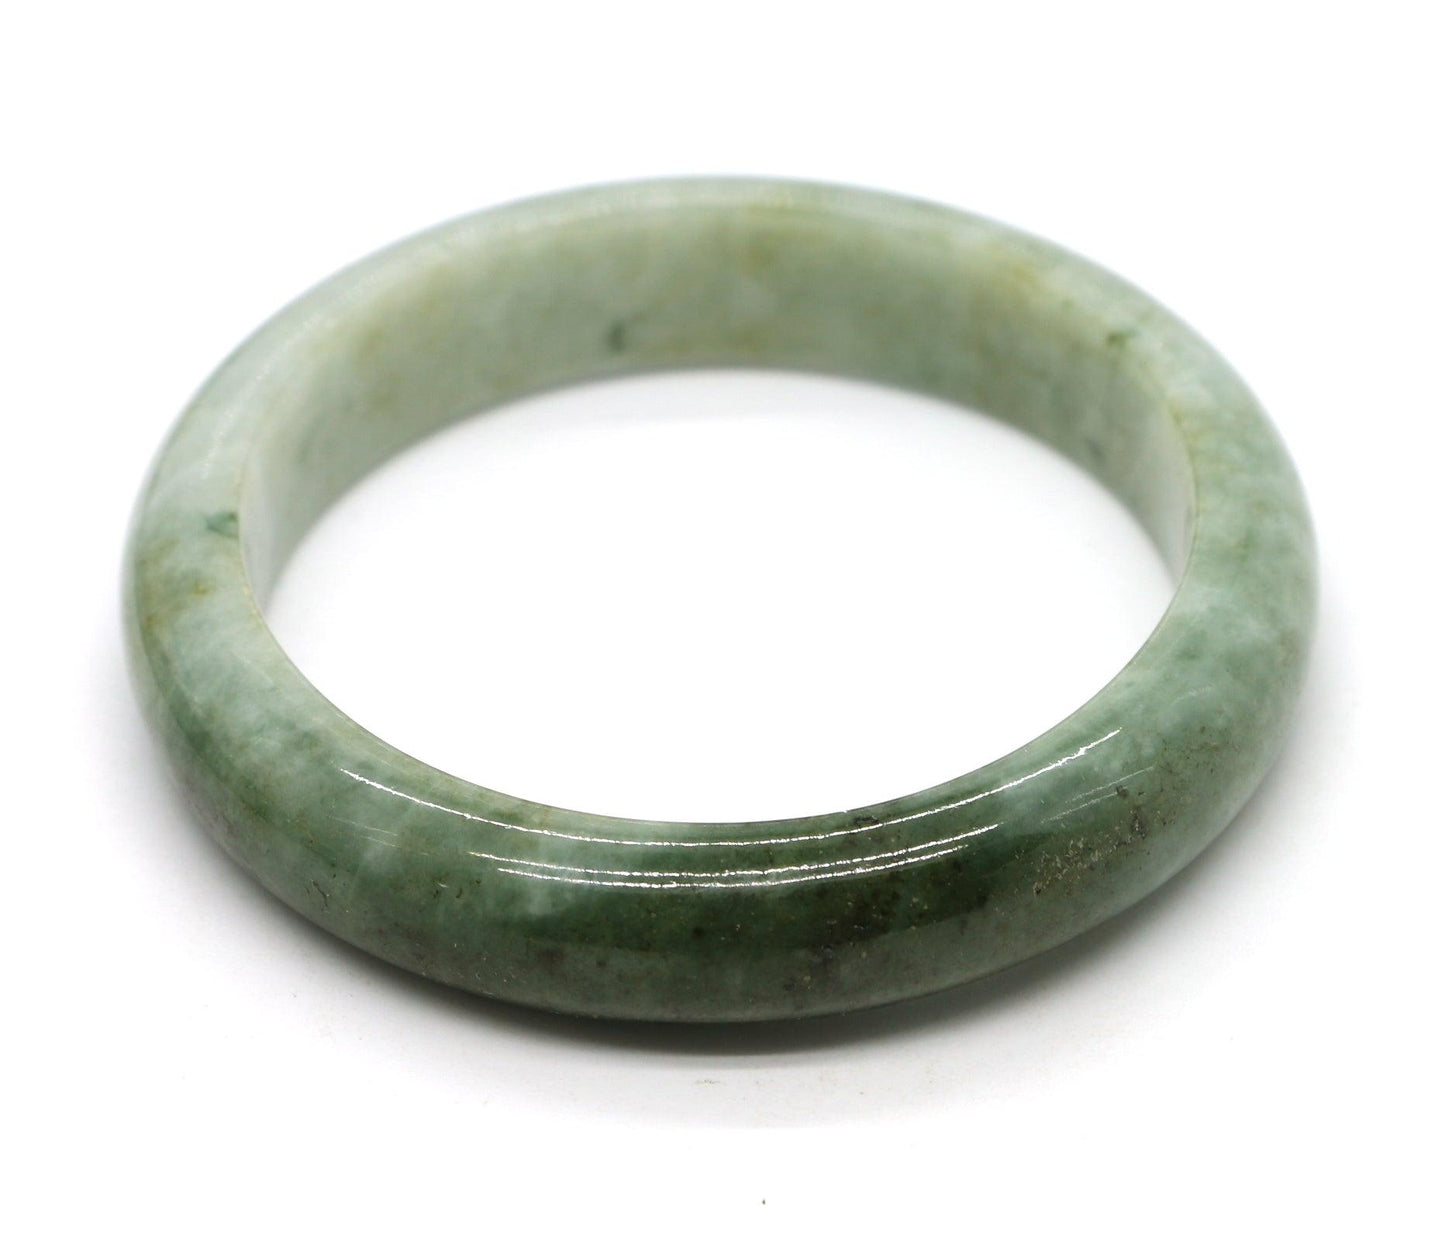 Type A Certified Jadeite Jade Bangle Size 56 -58mm B0BN7TS73R - Jade-collector.com